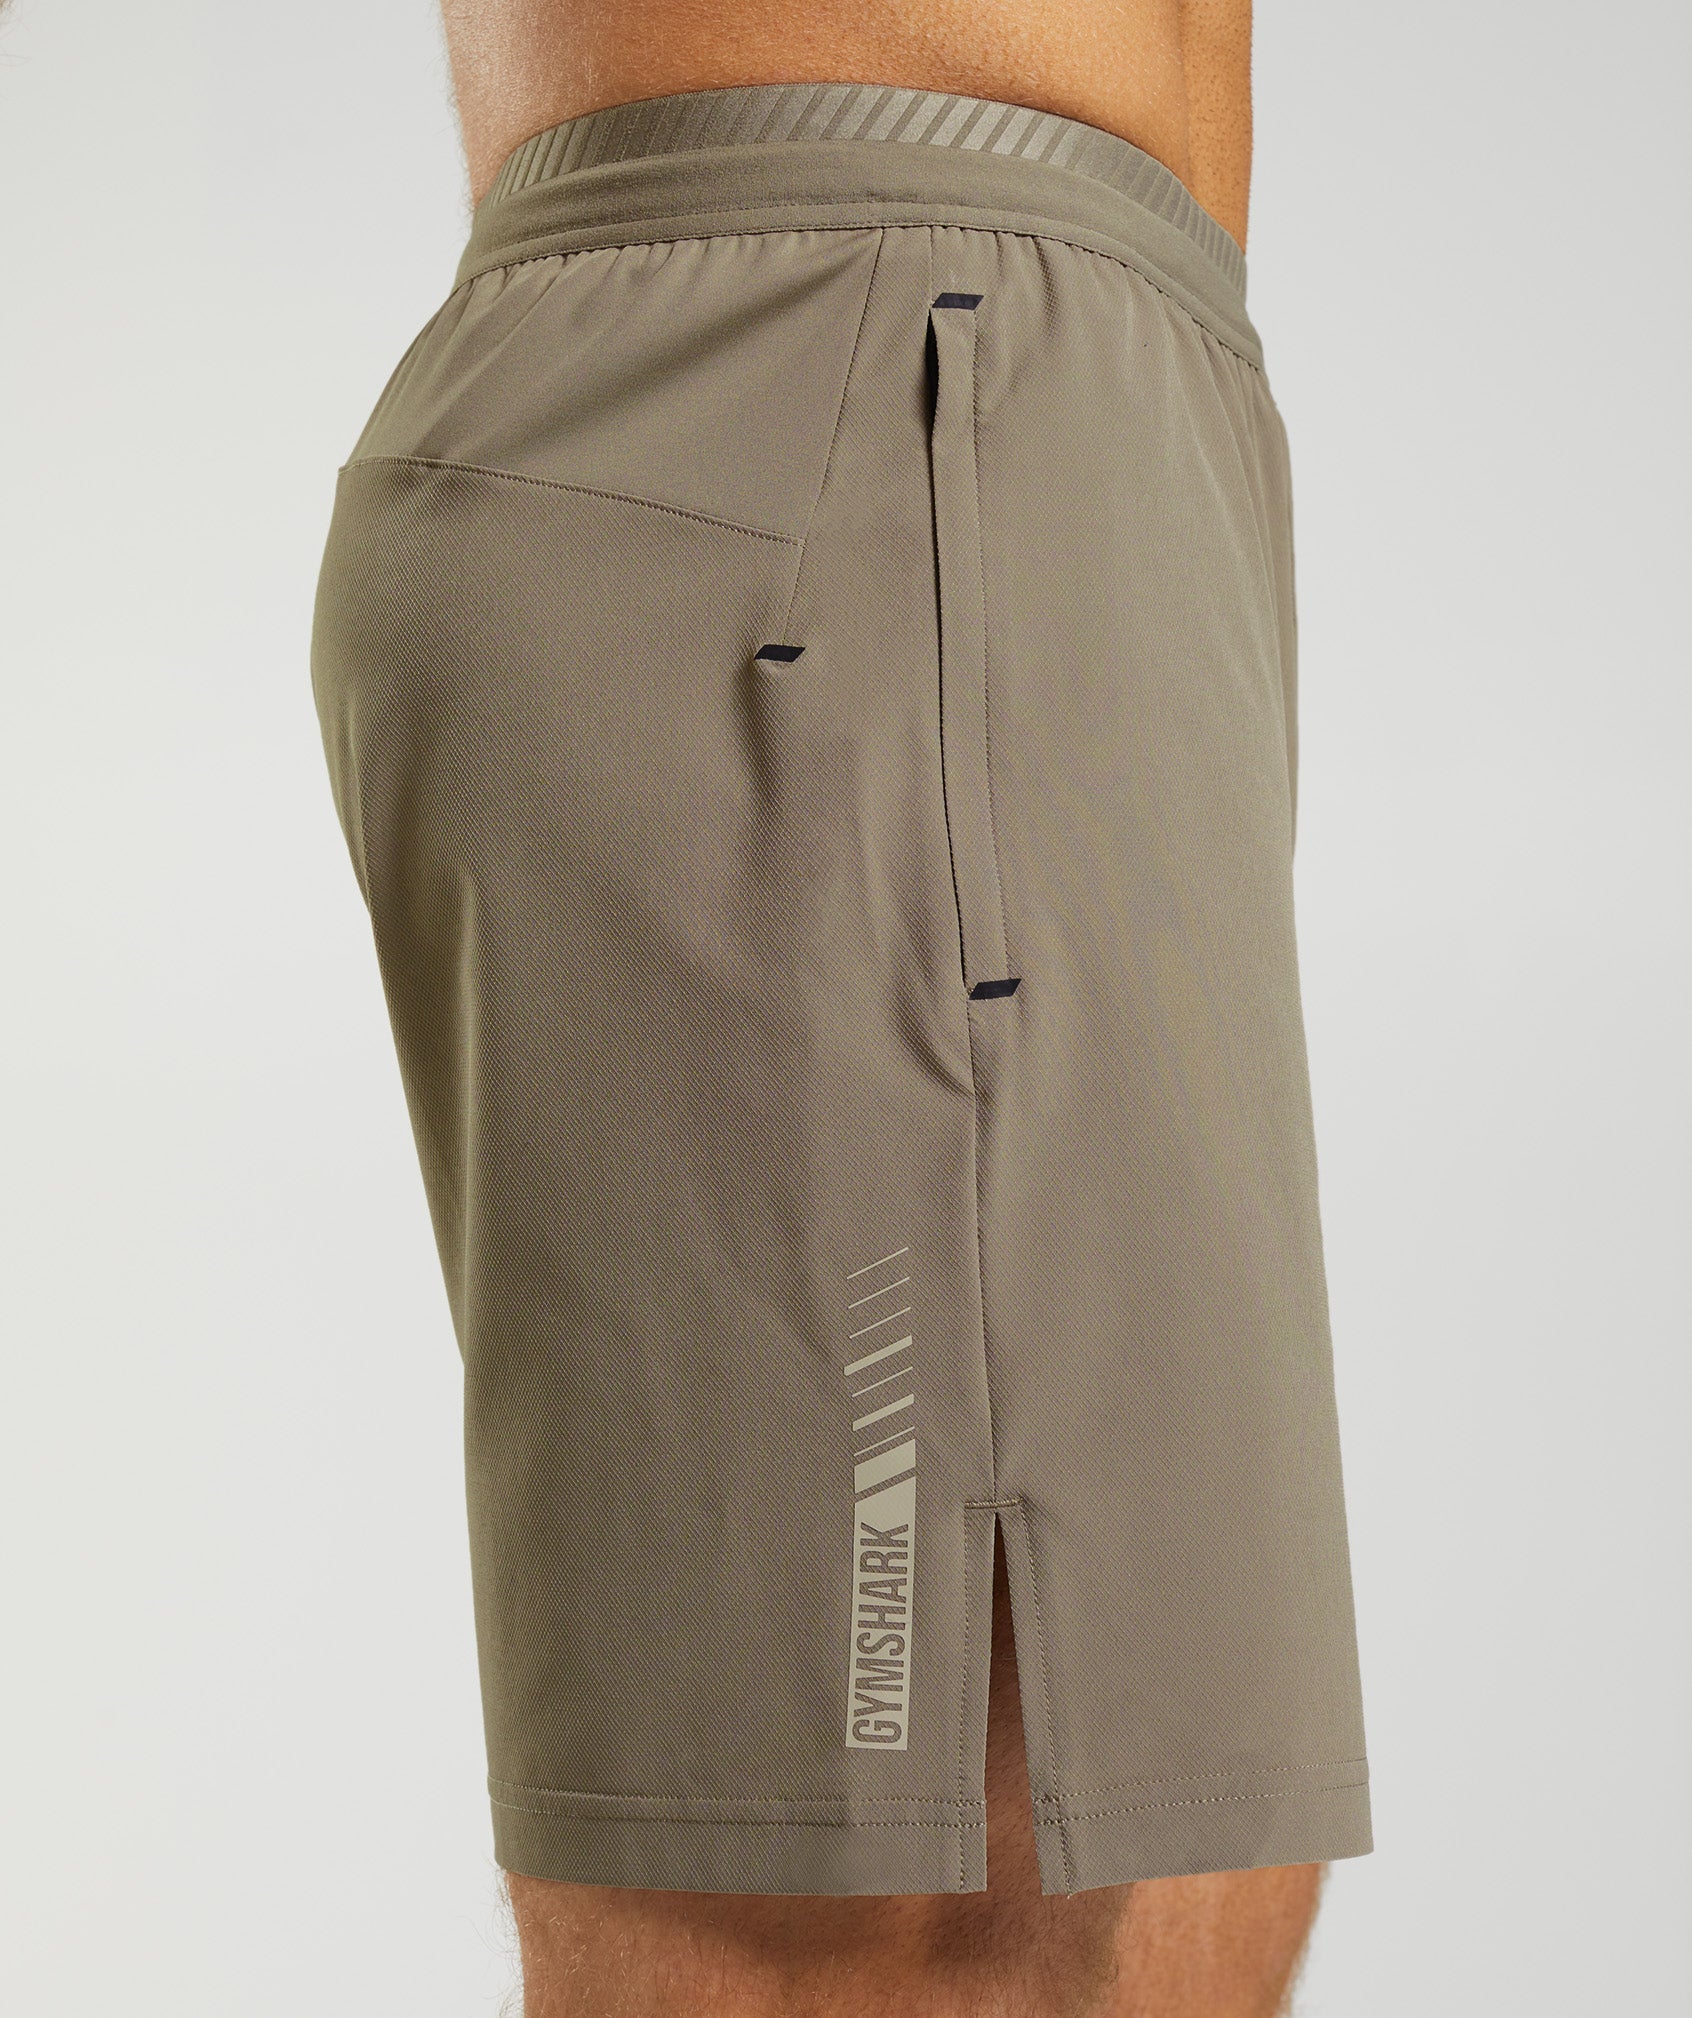 Apex 7" Hybrid Shorts in Earthy Brown